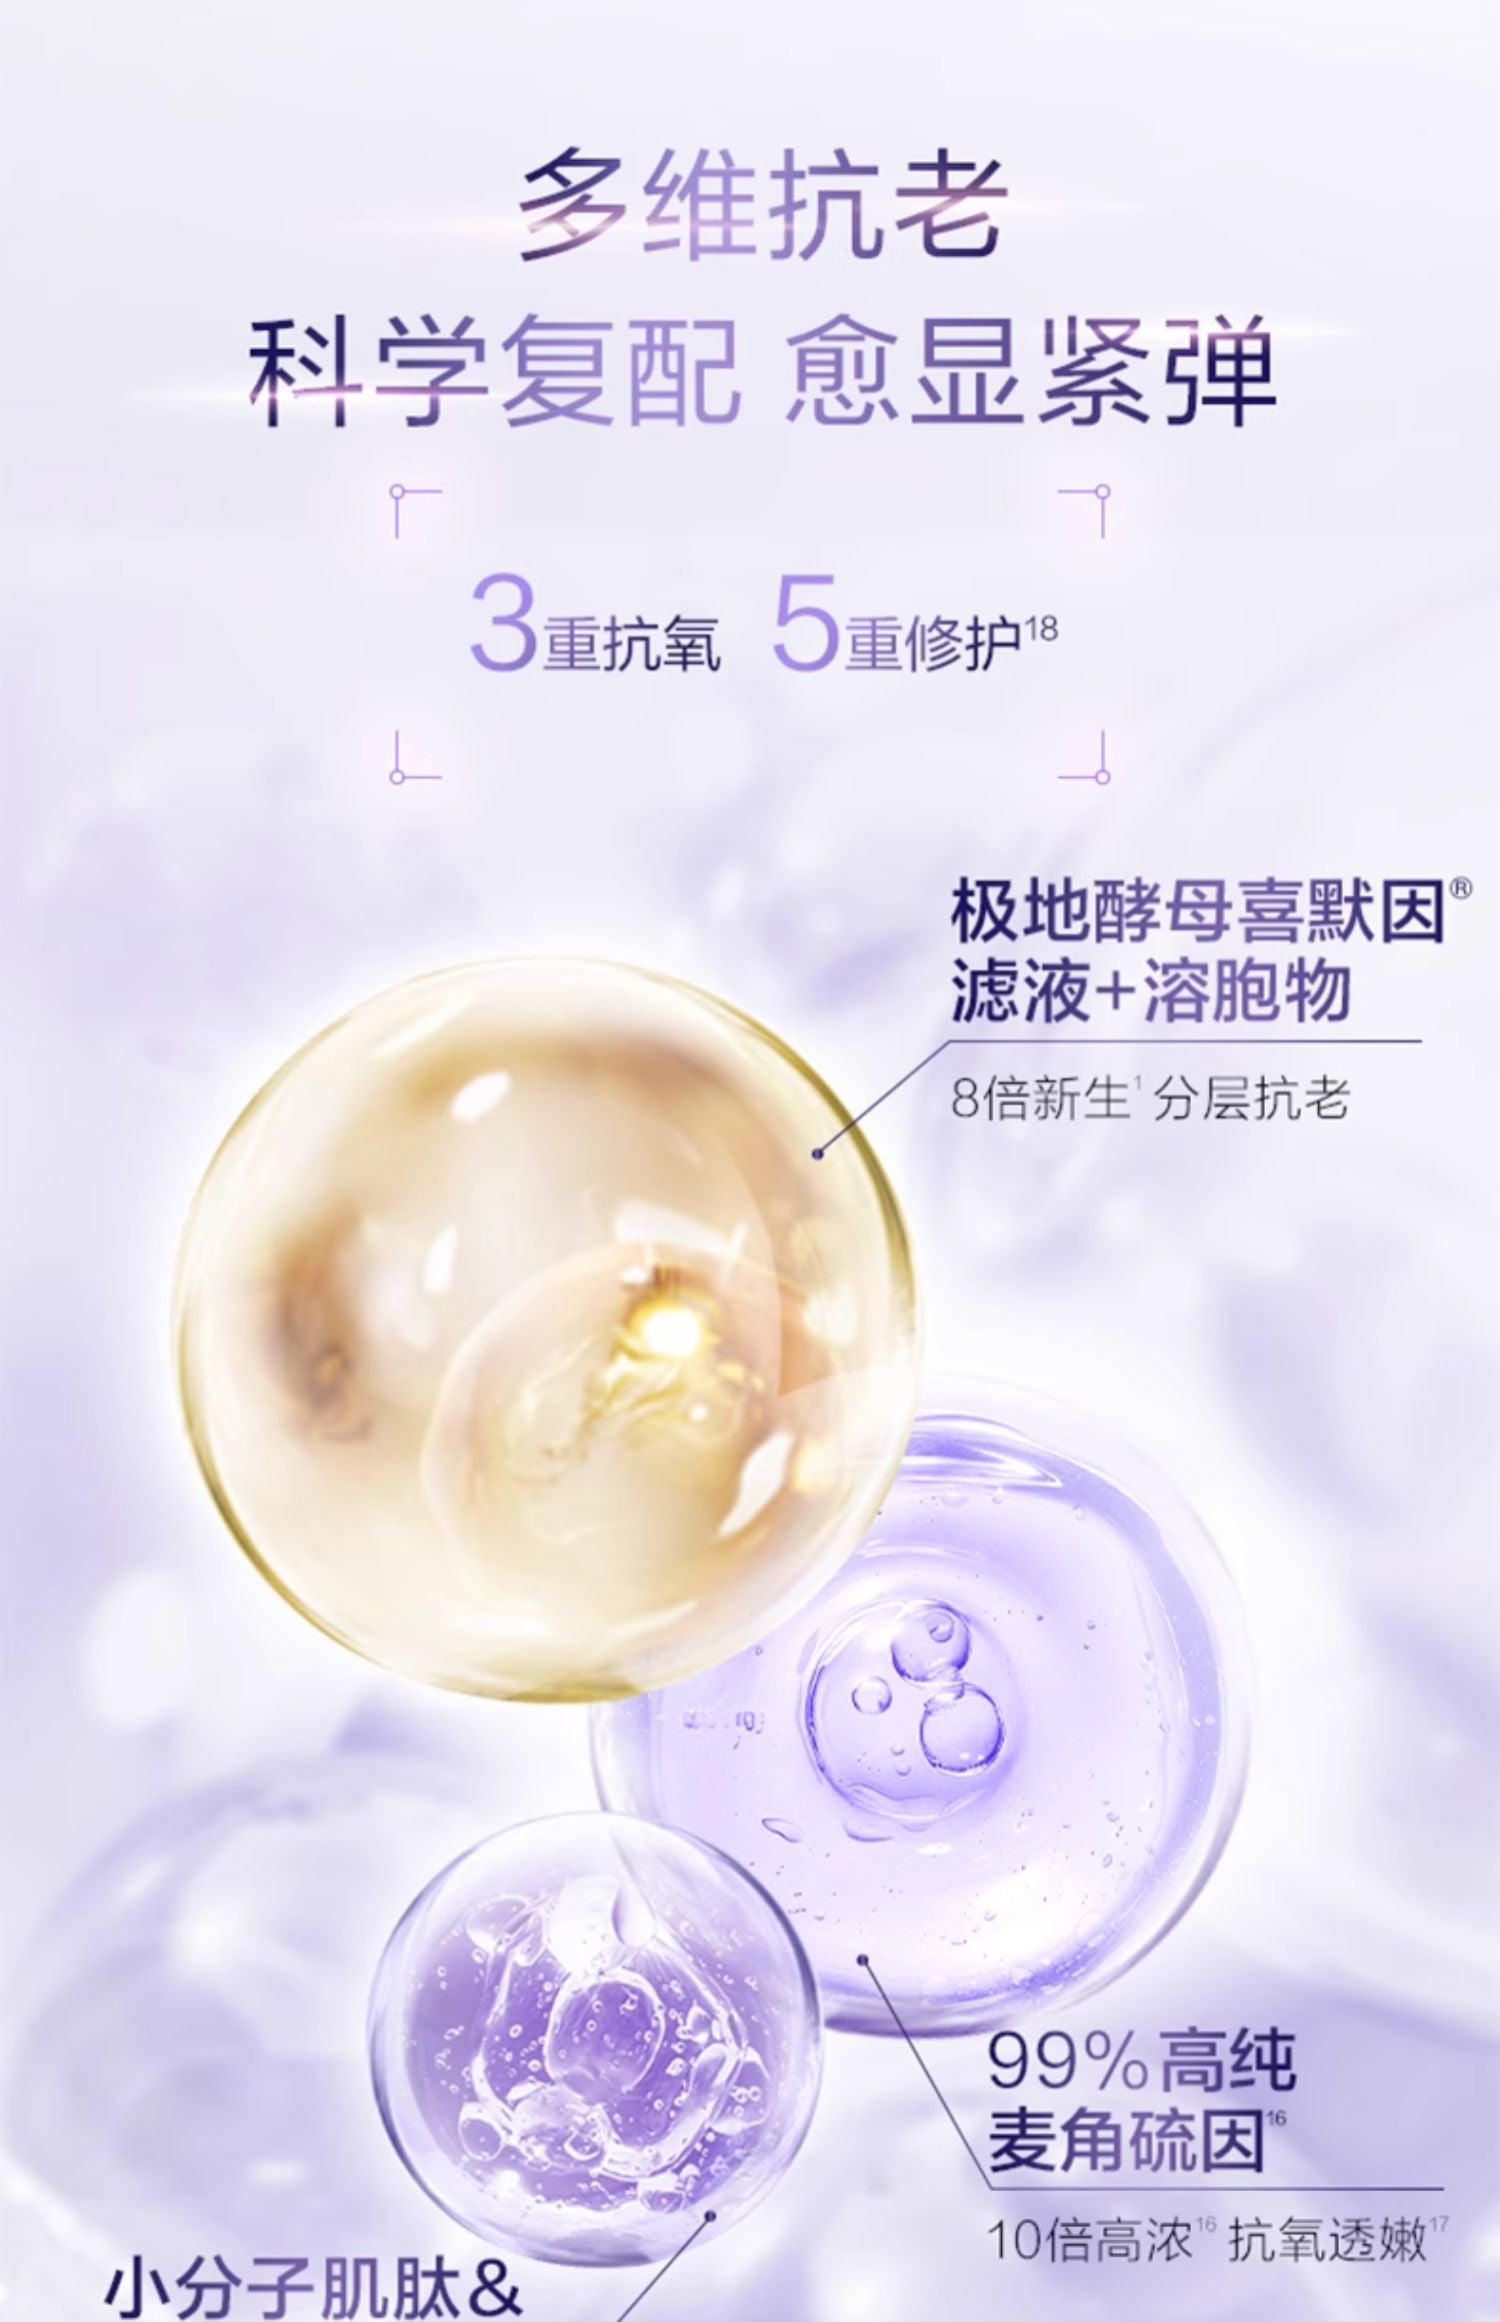 CHANDO Rejuvenation Repairing Essence 6.0 50ml 自然堂小紫瓶精华液6.0